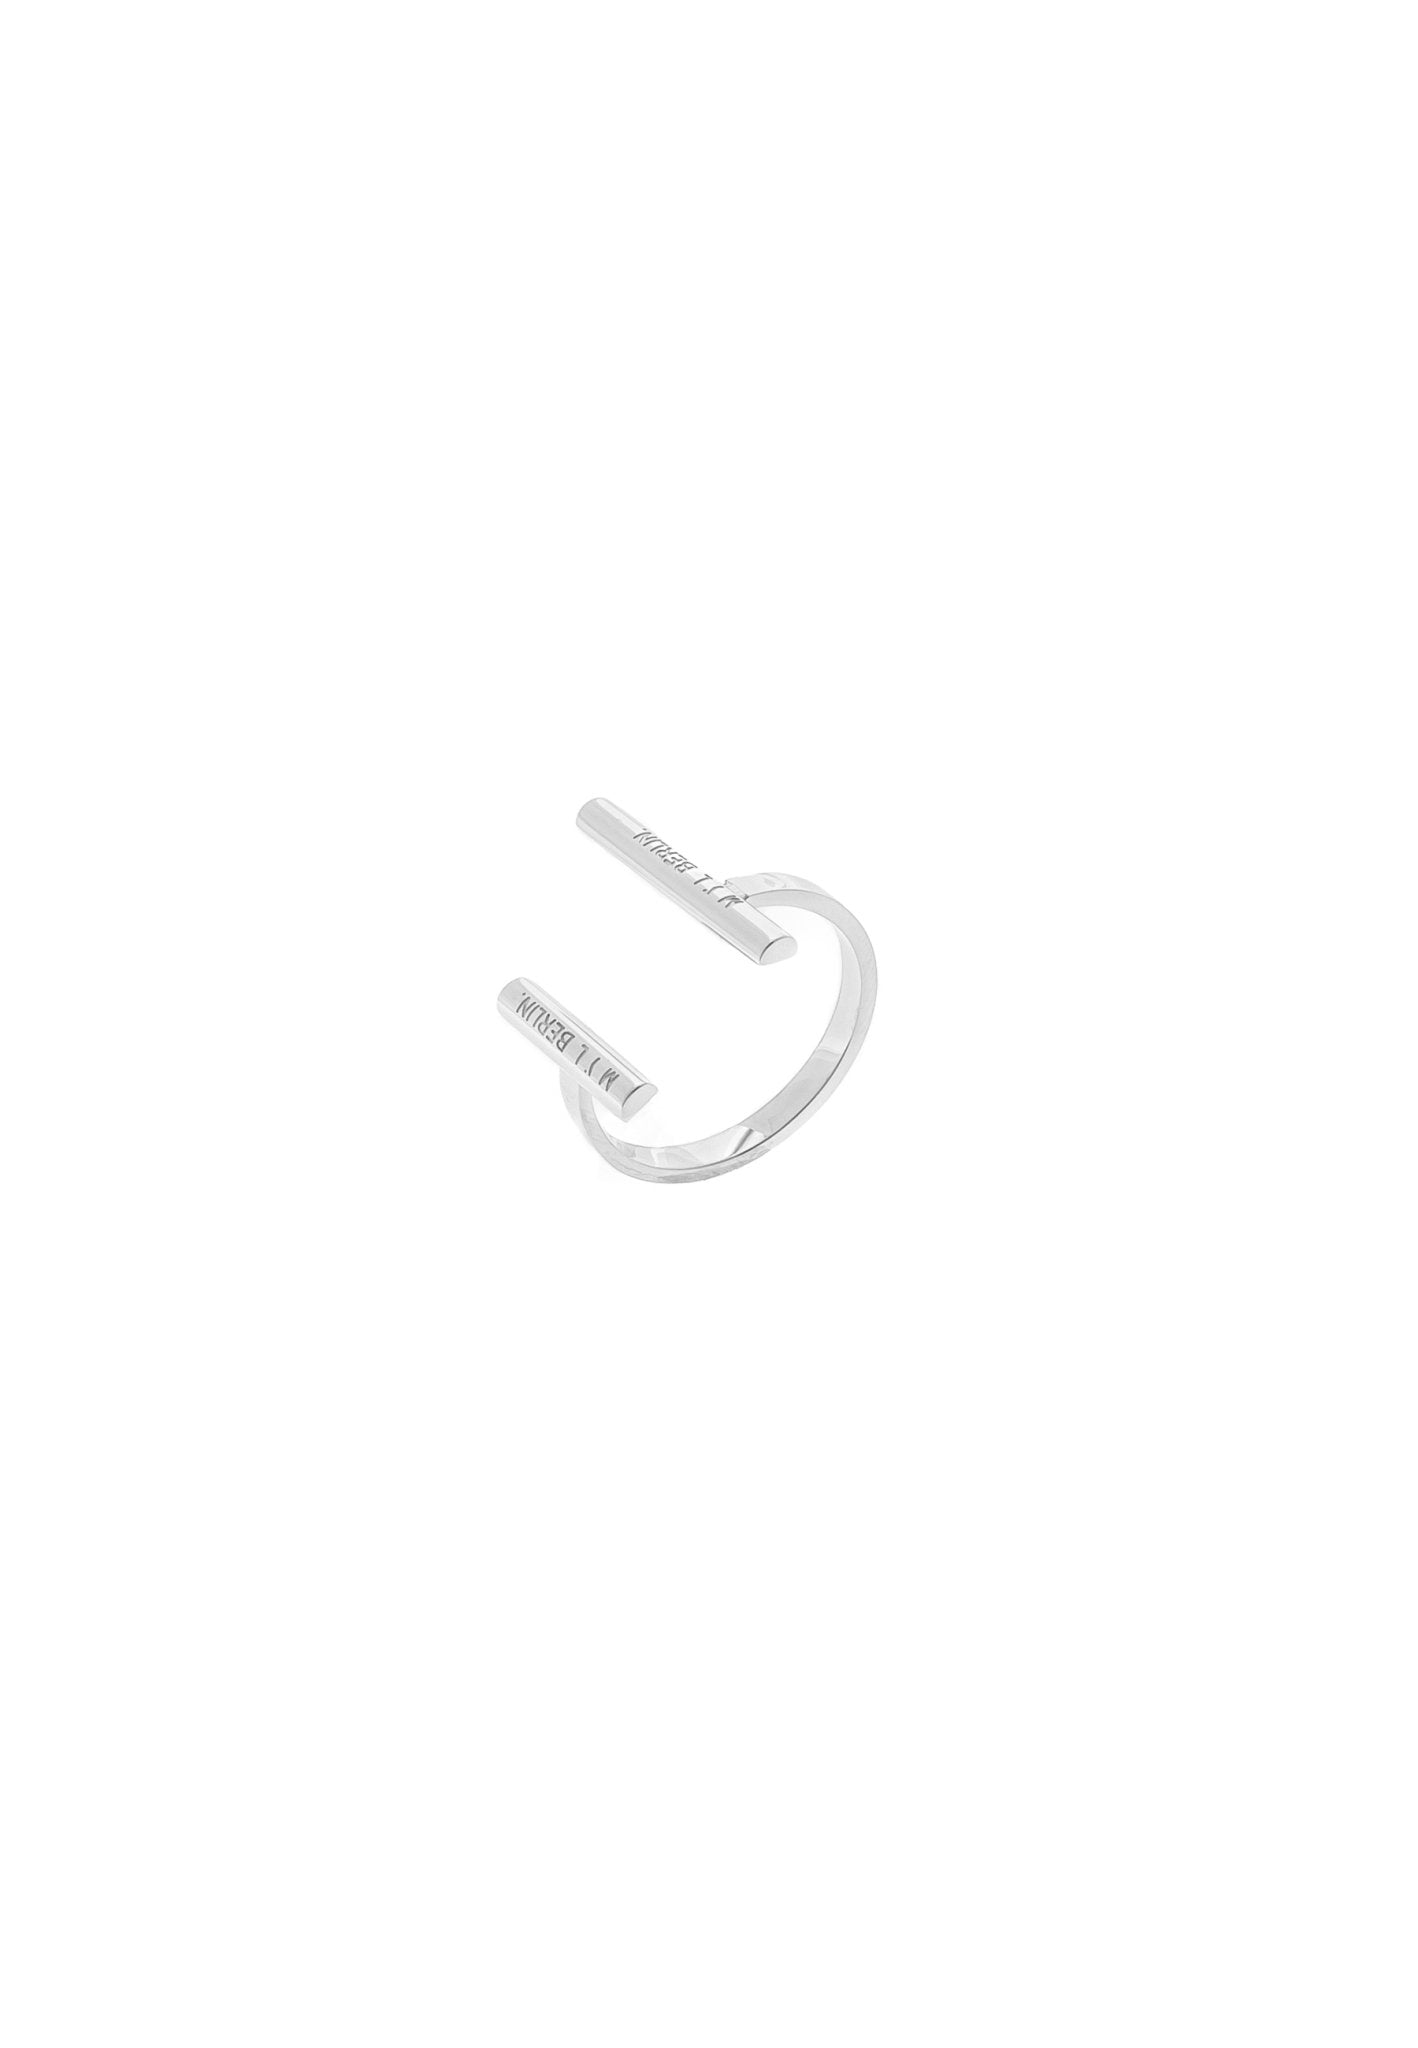 Adjustable Fit Ring "Versa" - MYL BERLIN - 4260654112764 - 4260654112764